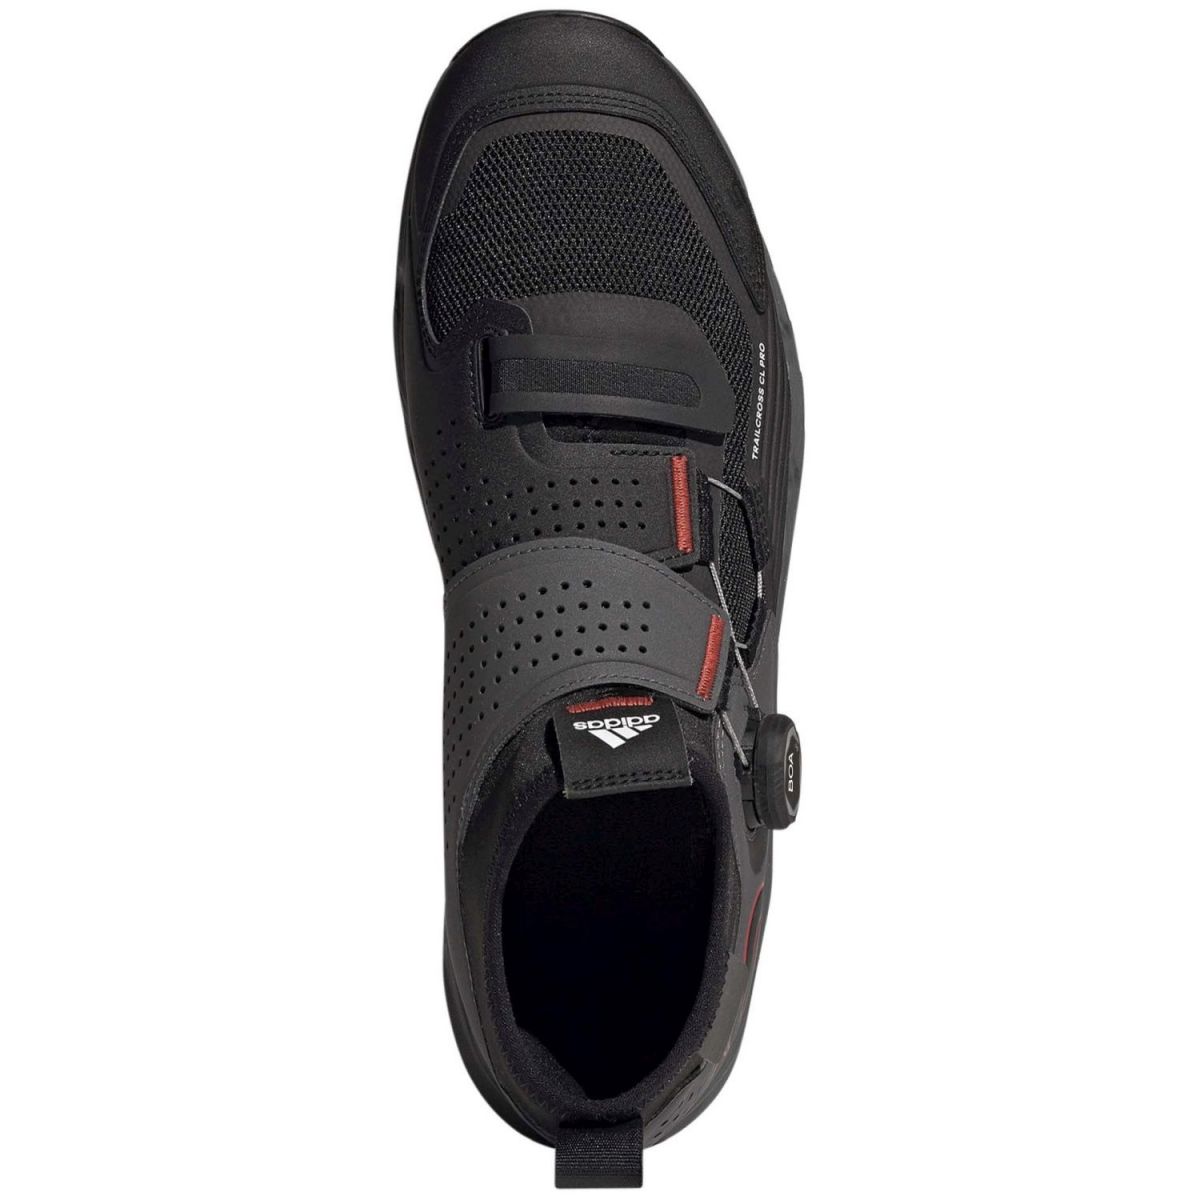 superior de las Zapatillas Five Ten Trailcross Pro Clip-in Boa para pedal automático | GY9117 | color negro